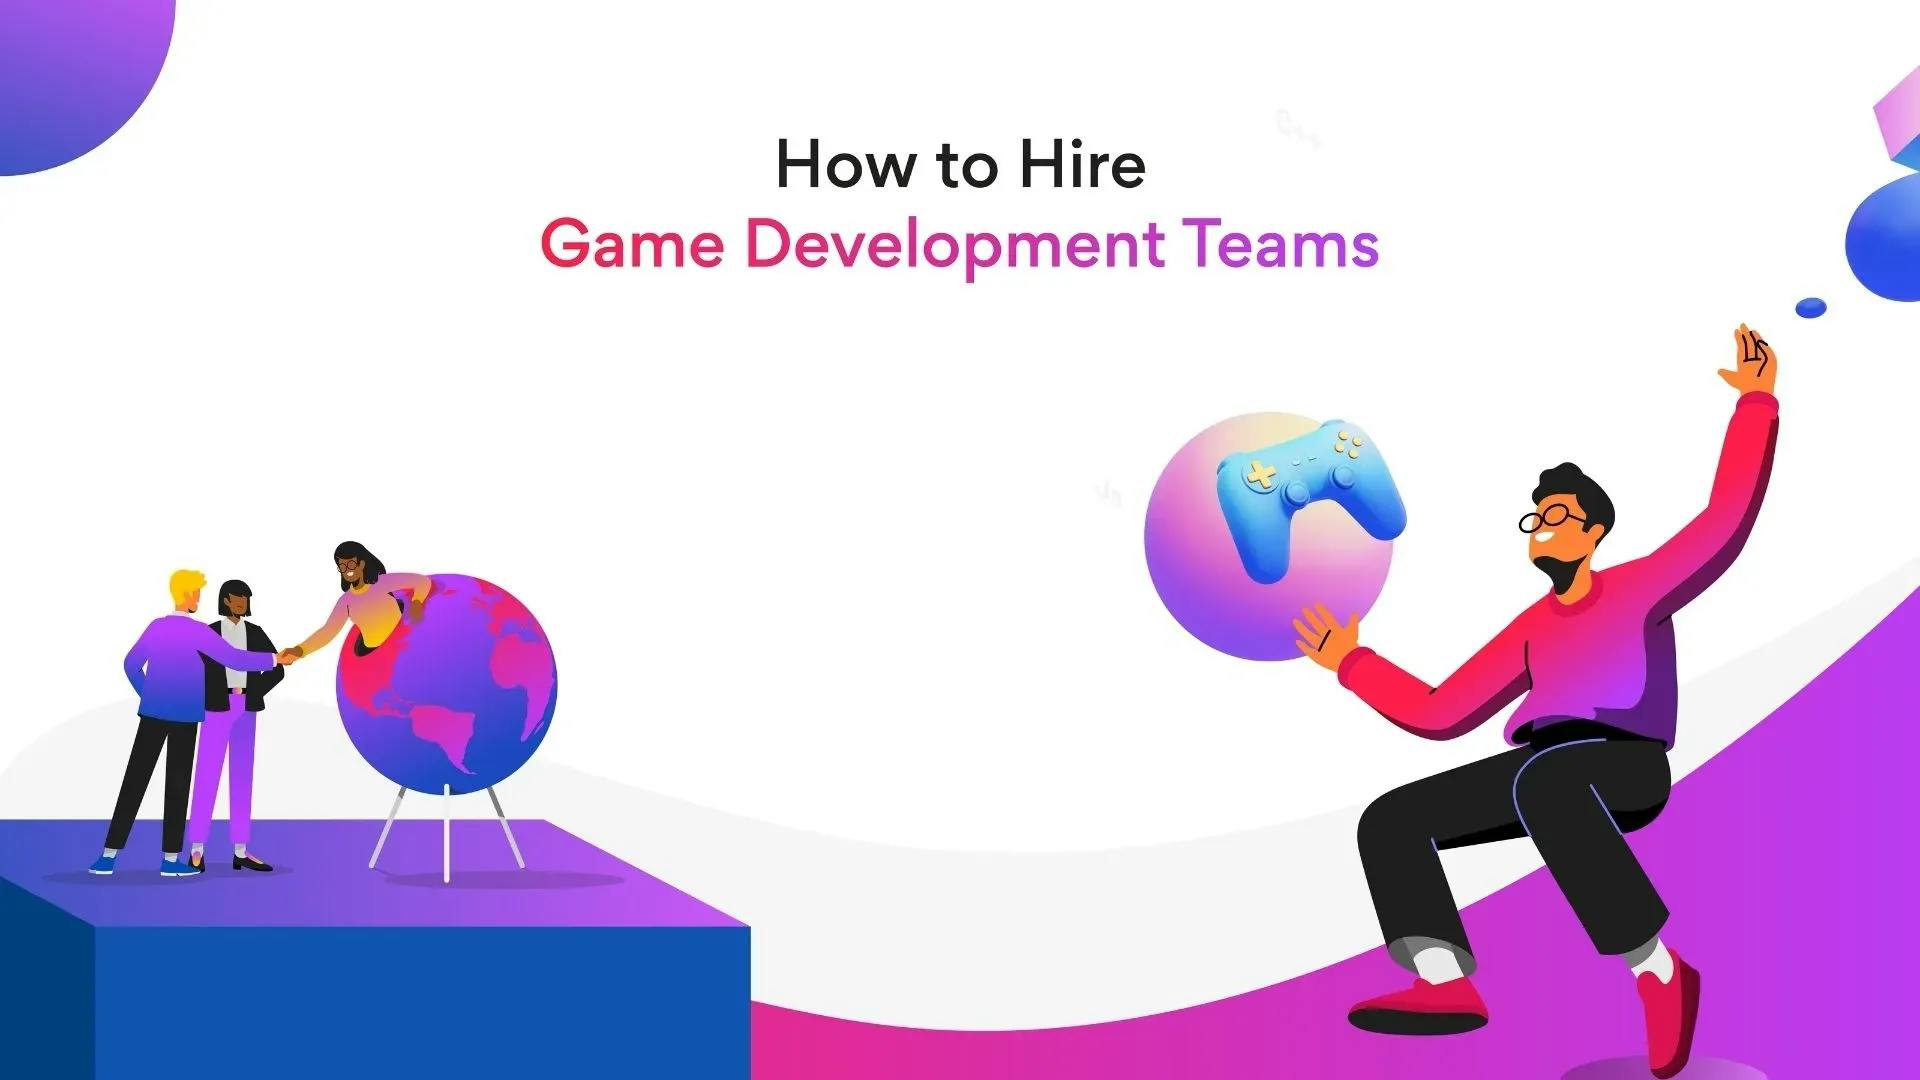 How do Gaming Studios Hire Game Development Teams?